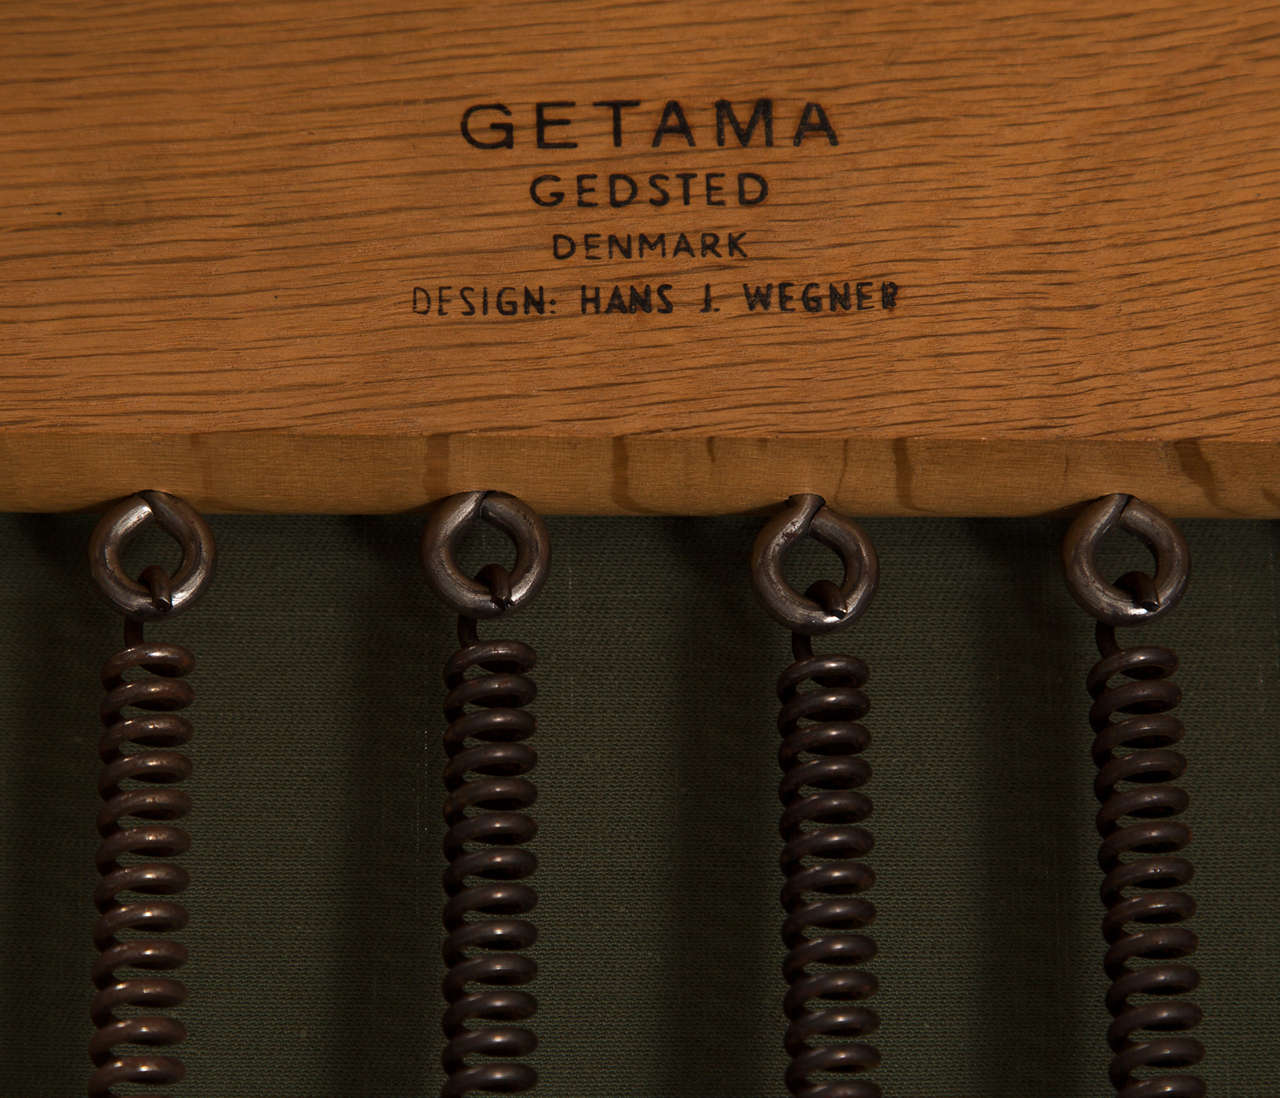 Solid Oak Hans J. Wegner Chaise Longue for Getama 1